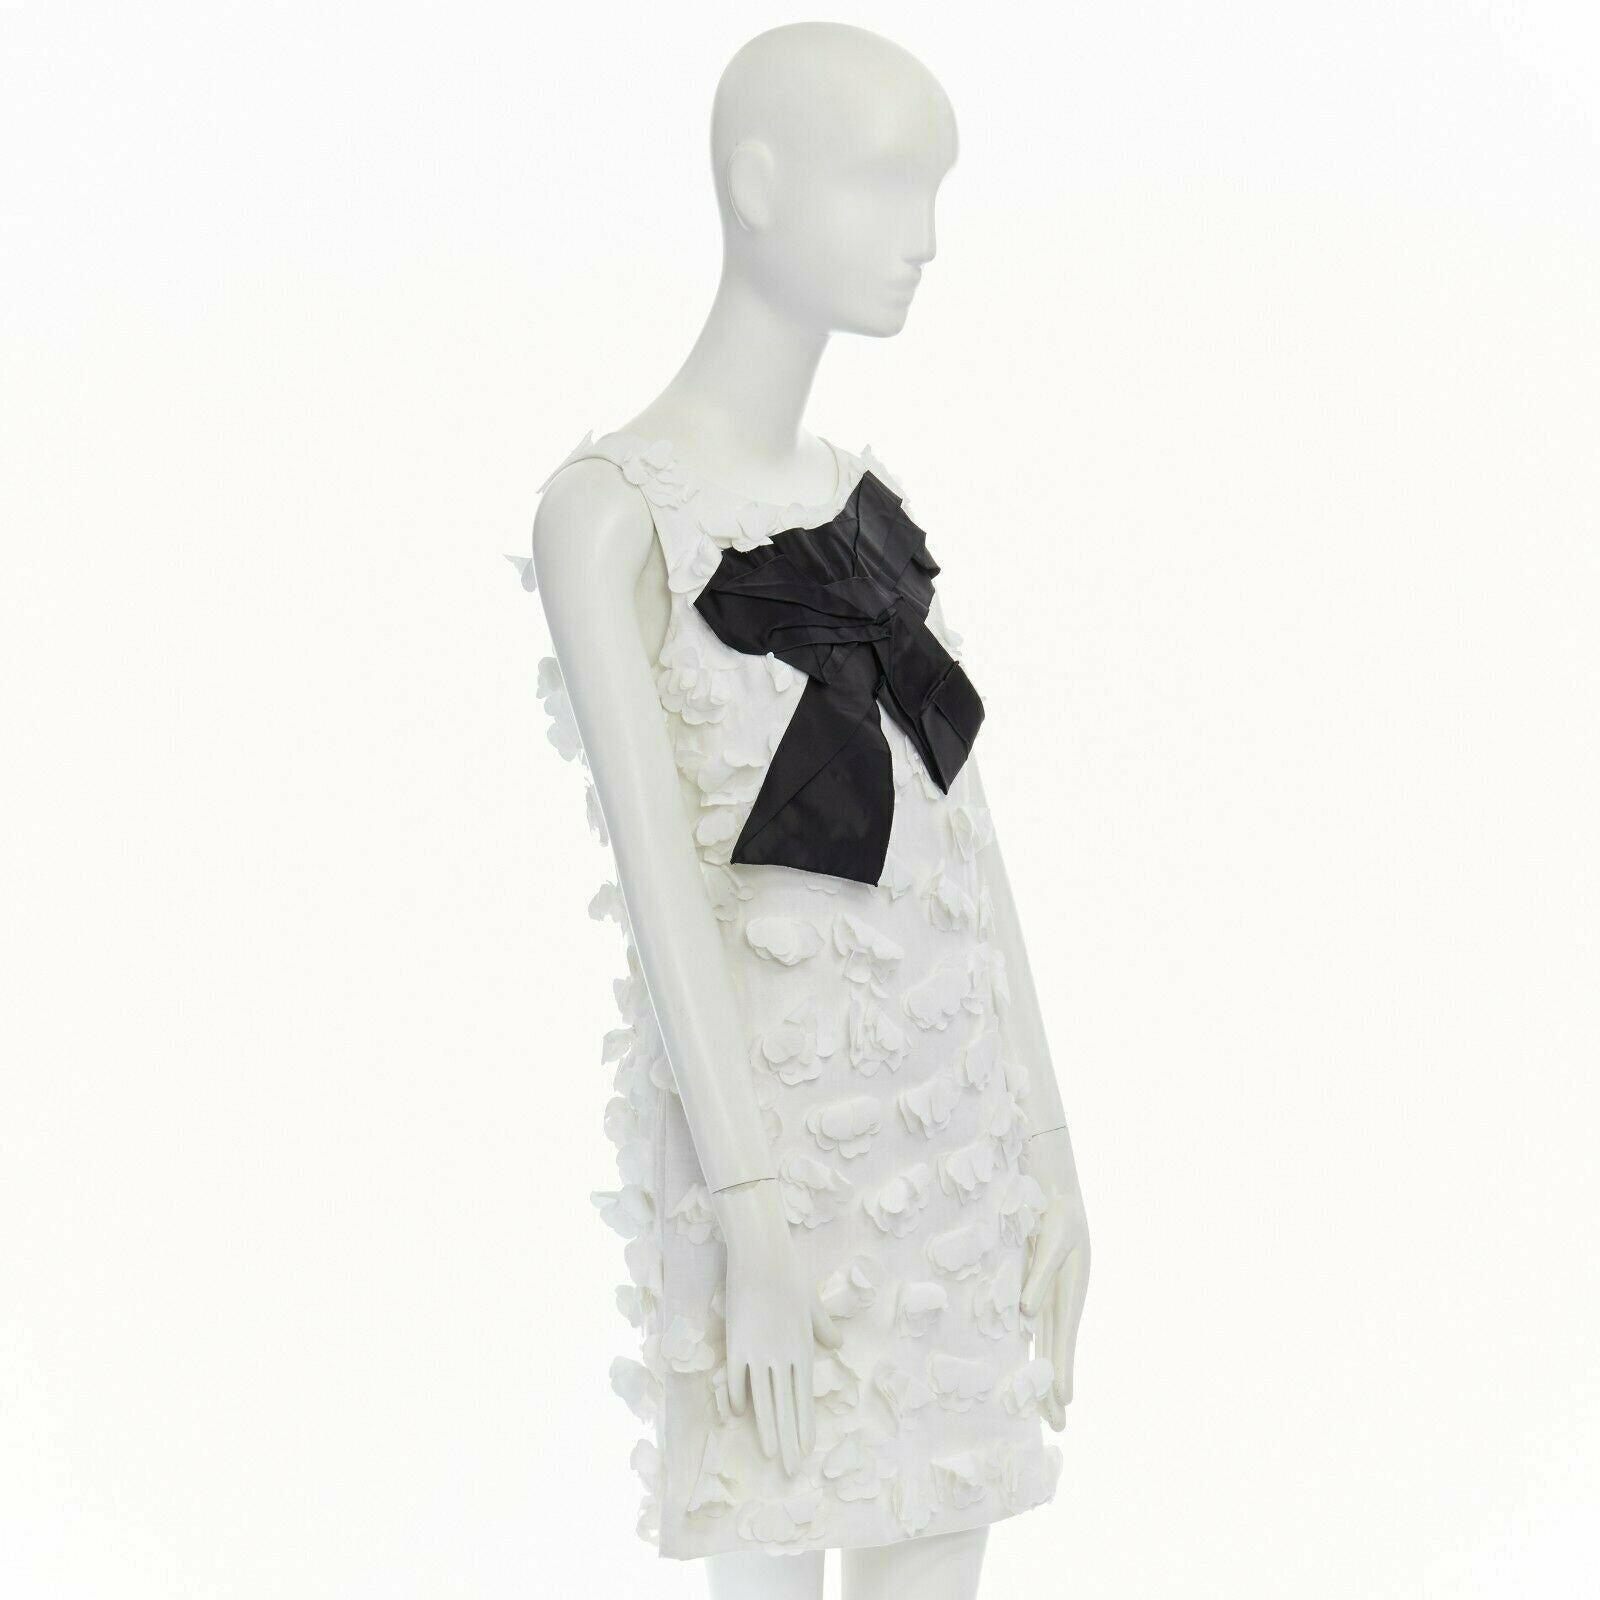 Gray DOLCE GABBANA white 3D floral petal applique black bow sheath dress IT38 US0 XS